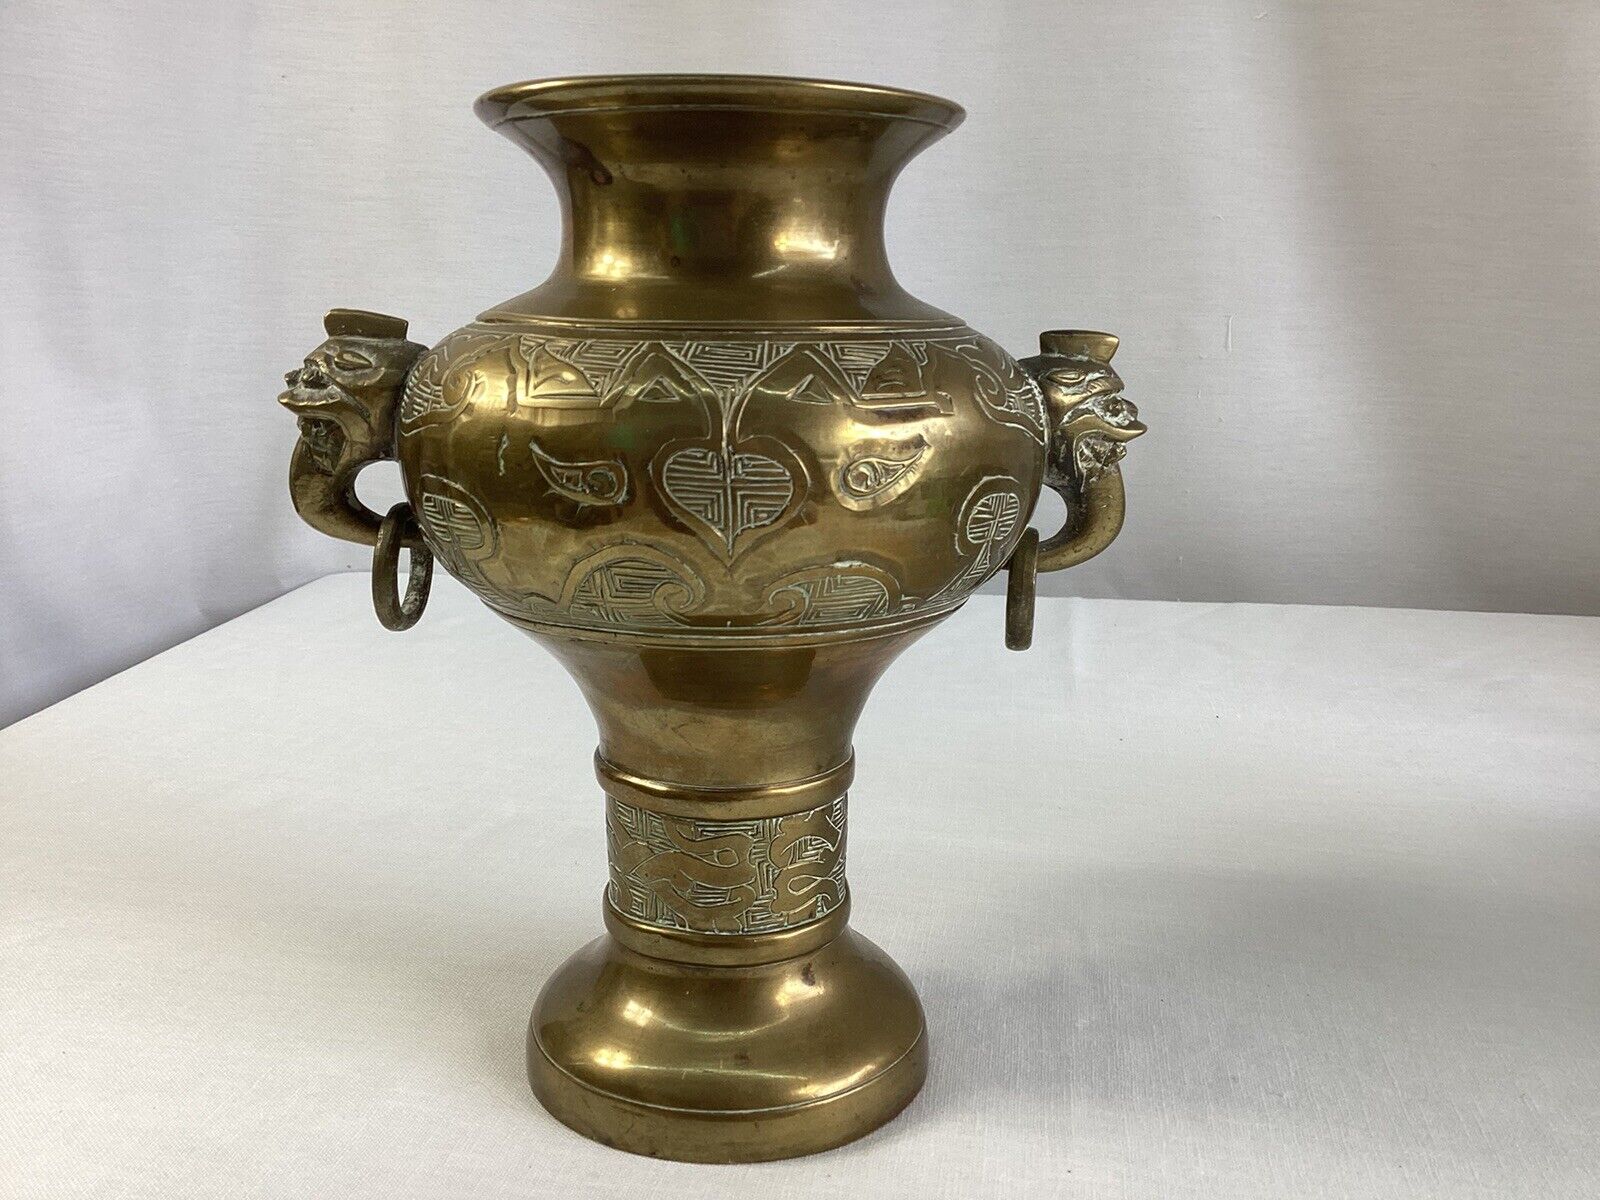 Vintage Solid Brass Incense Holder - 7 3/4” Tall